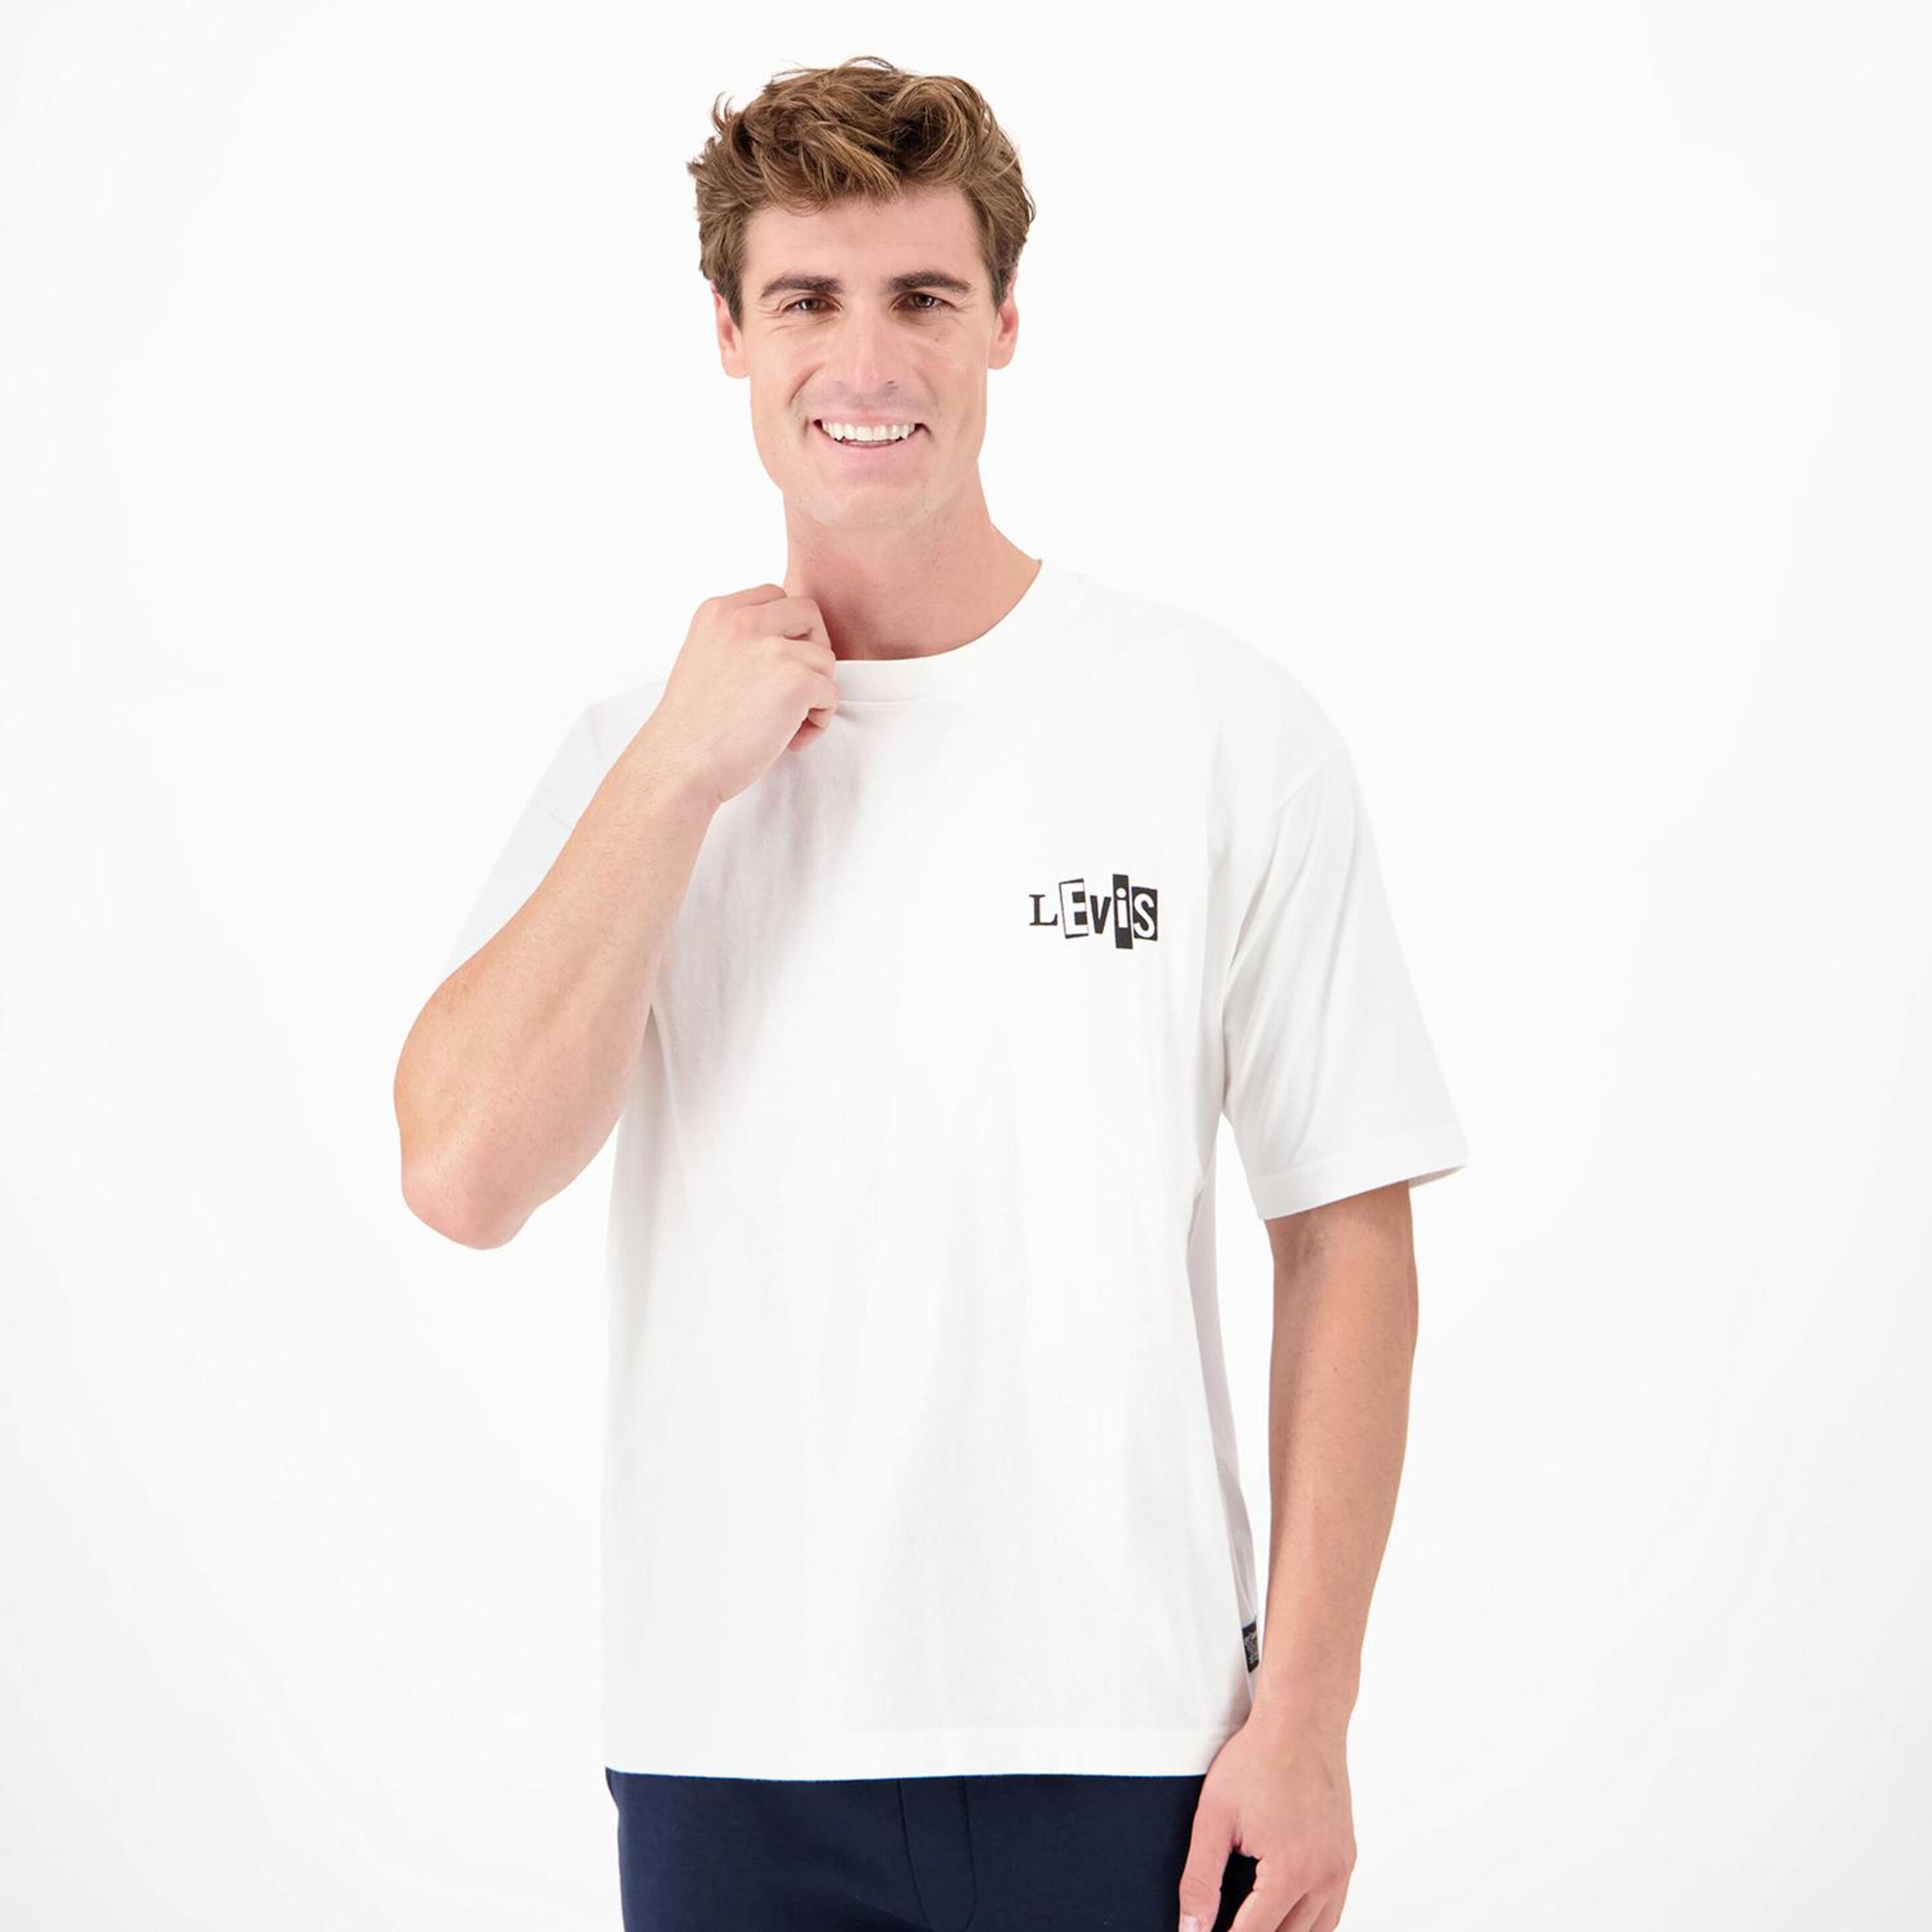 Levi's Skate - blanco - Camiseta Hombre